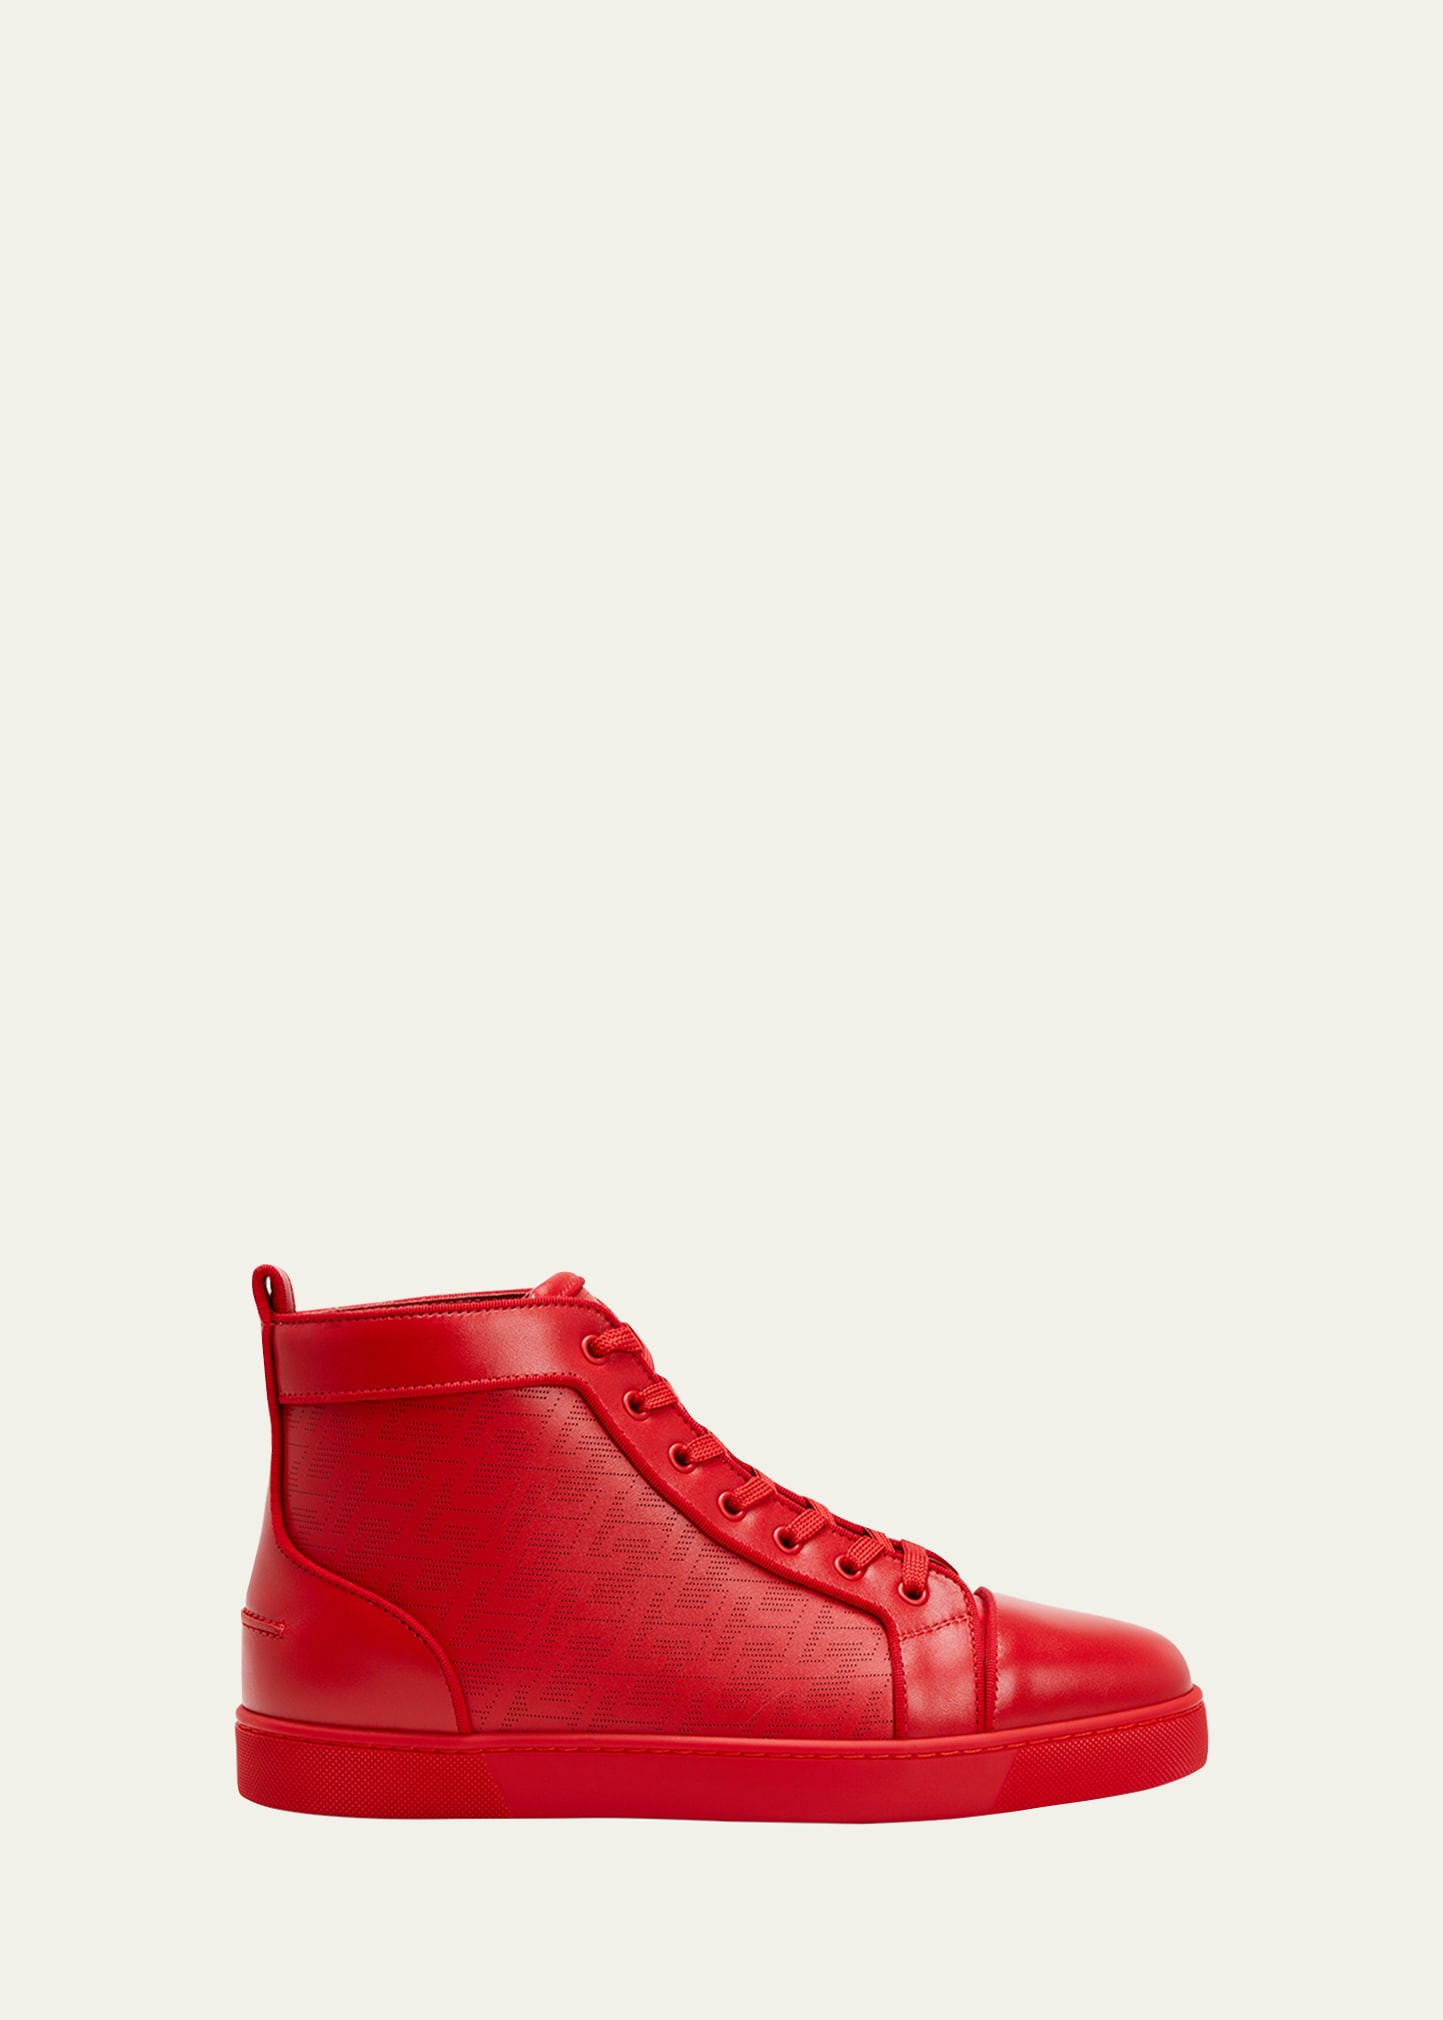 Men's Louis Tonal Perforated Leather High-Top Sneakers